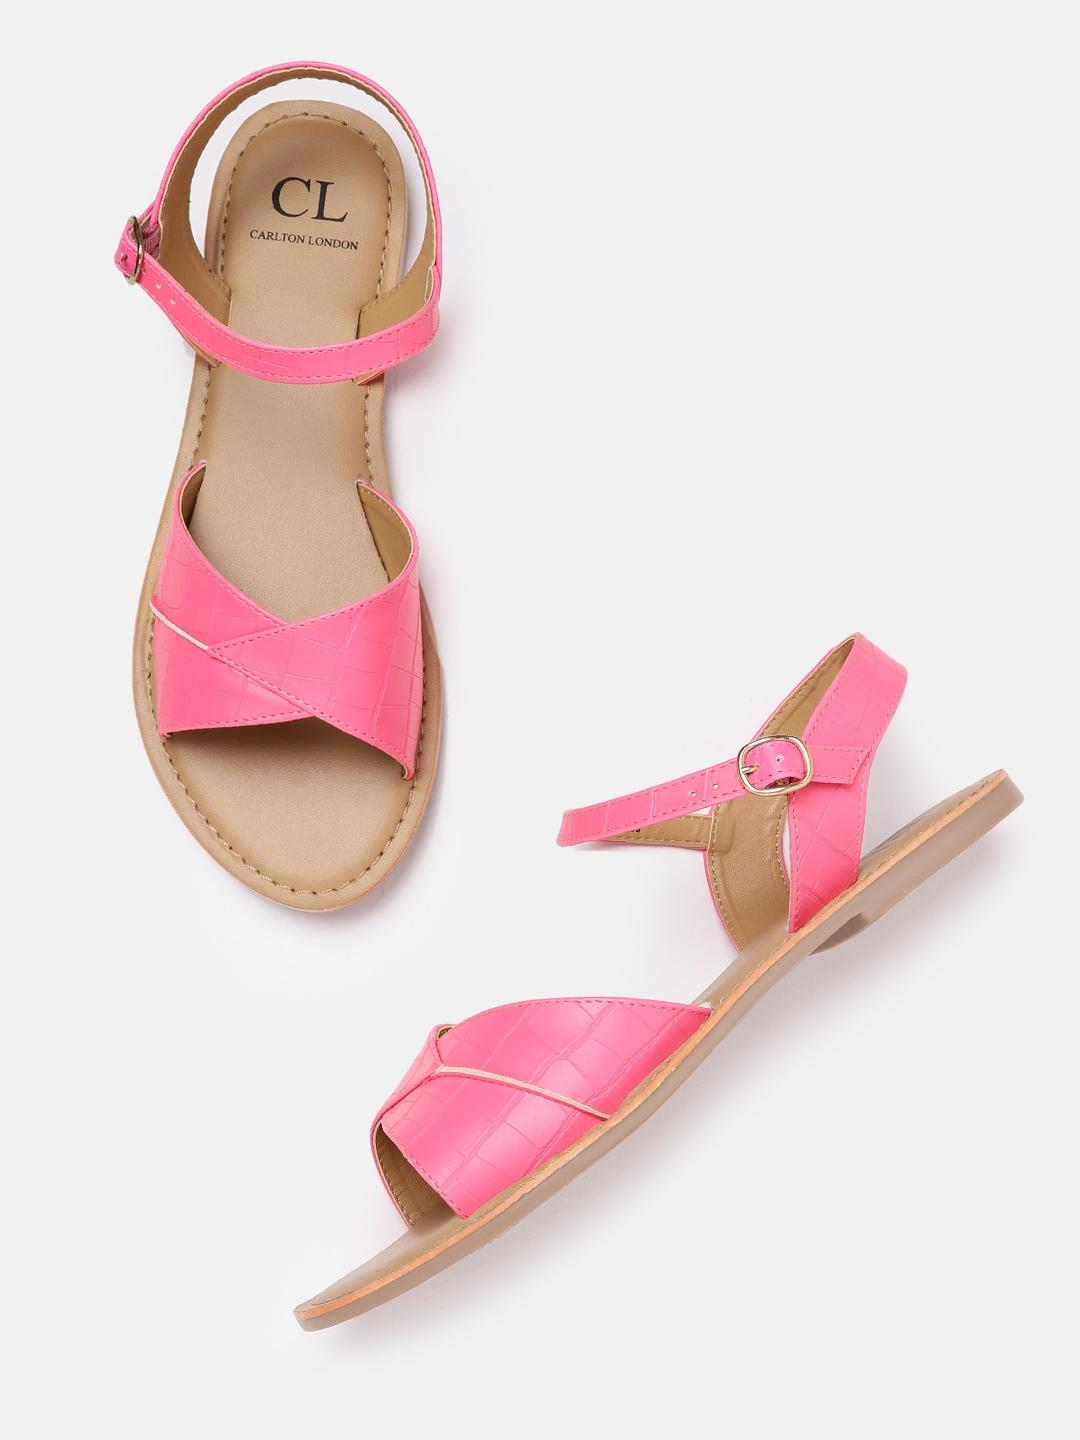 Carlton London Women Pink Croc Textured Open Toe Flats